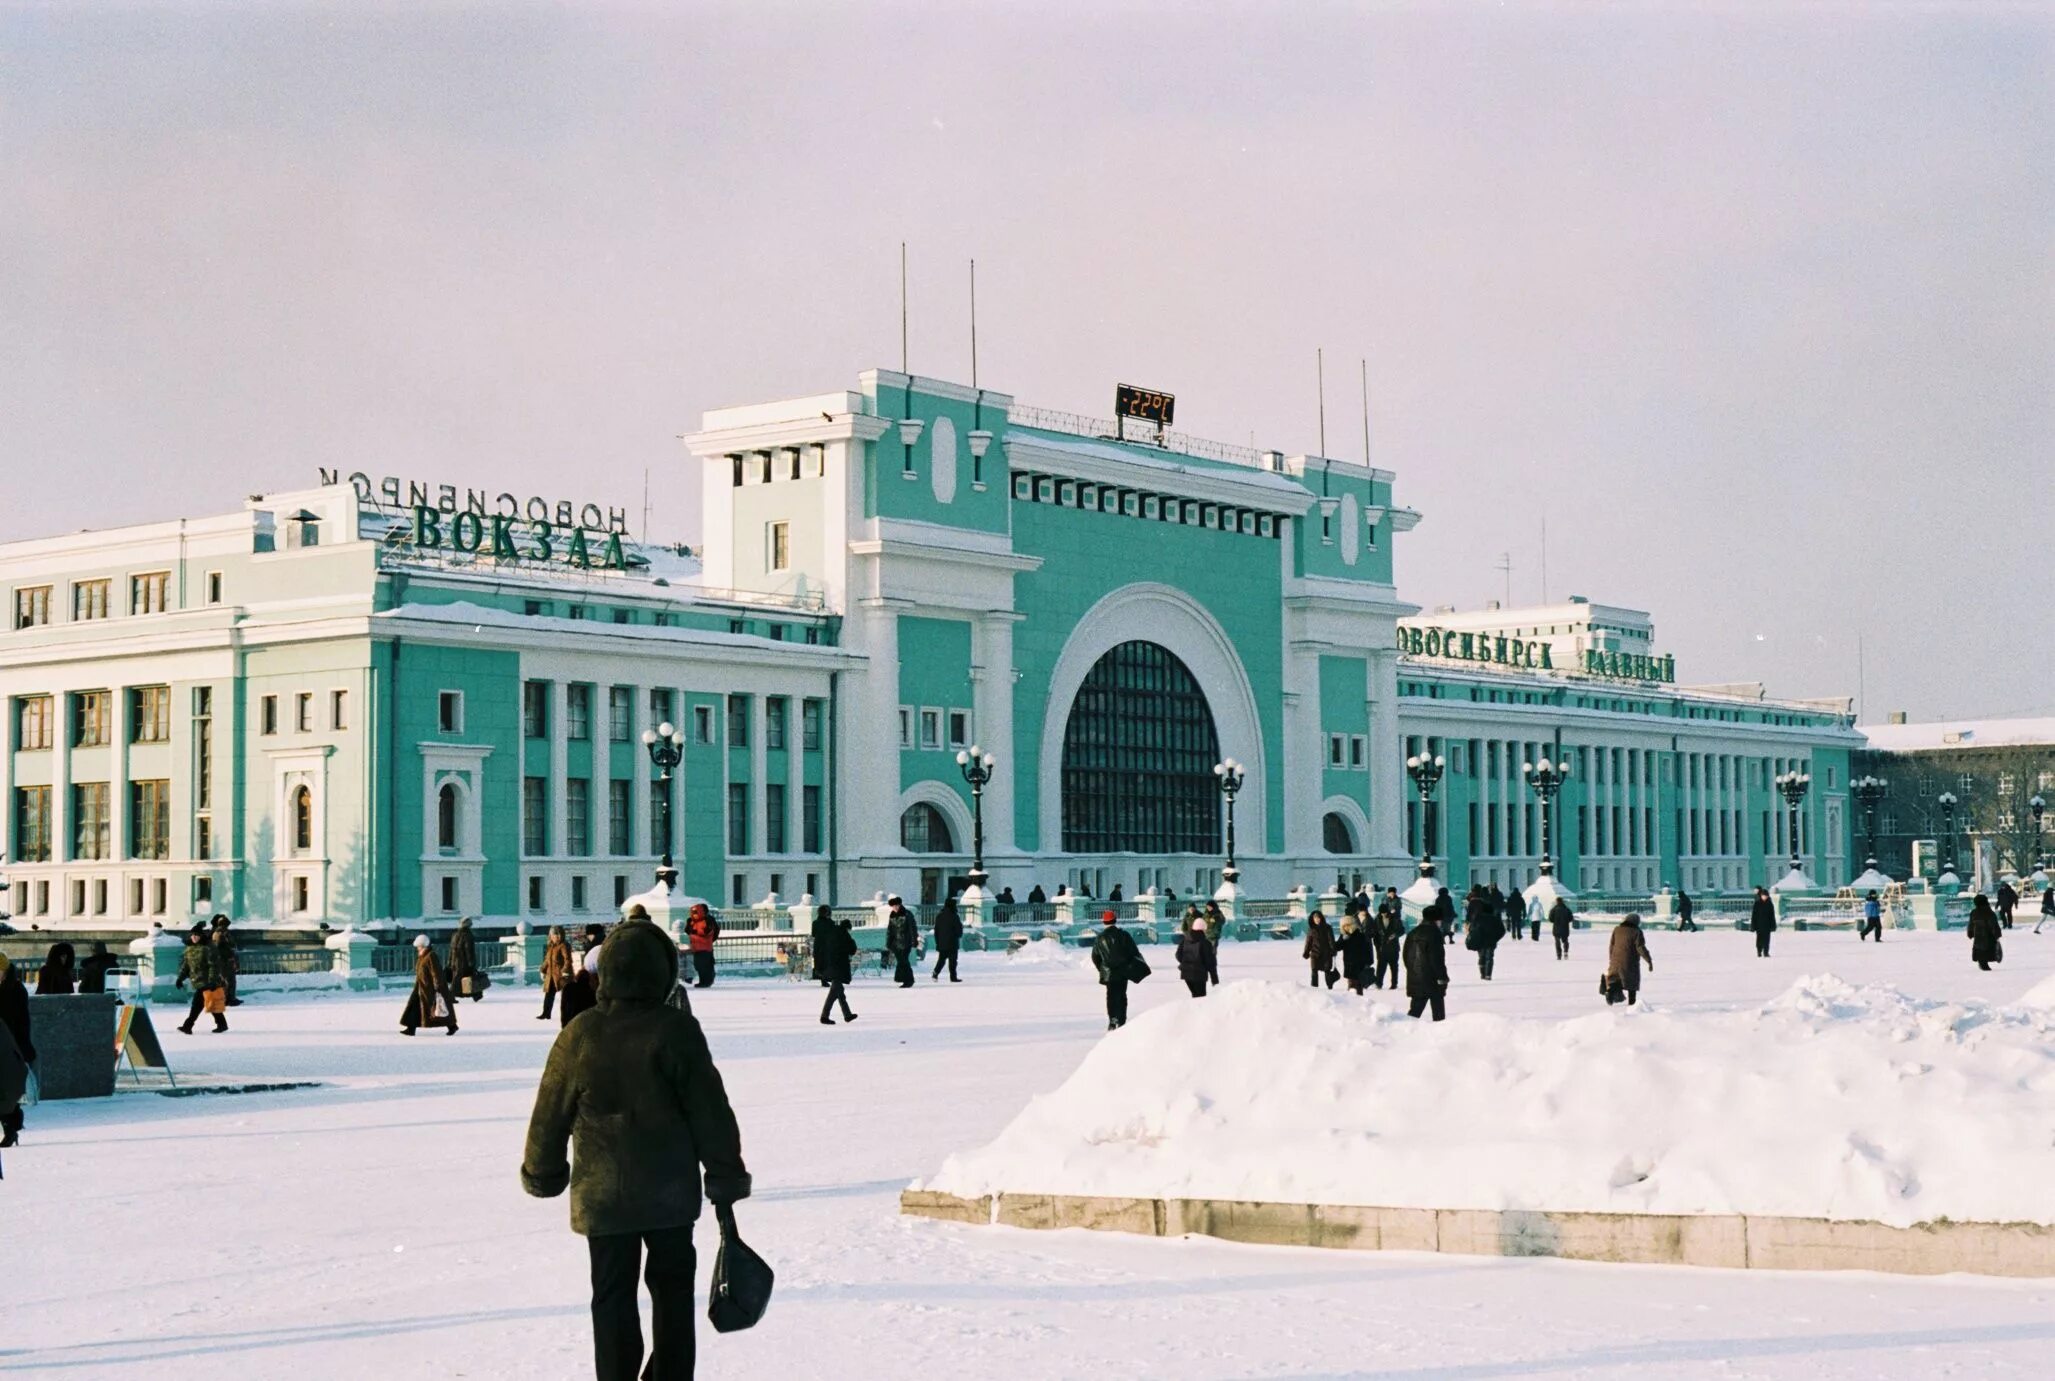 ЖД вокзал Новосибирск зимой. Станция Новосибирск-главный, Новосибирск. Новосибирск вокзал главный зима. Новосибирский ЖД вокзал зимой.